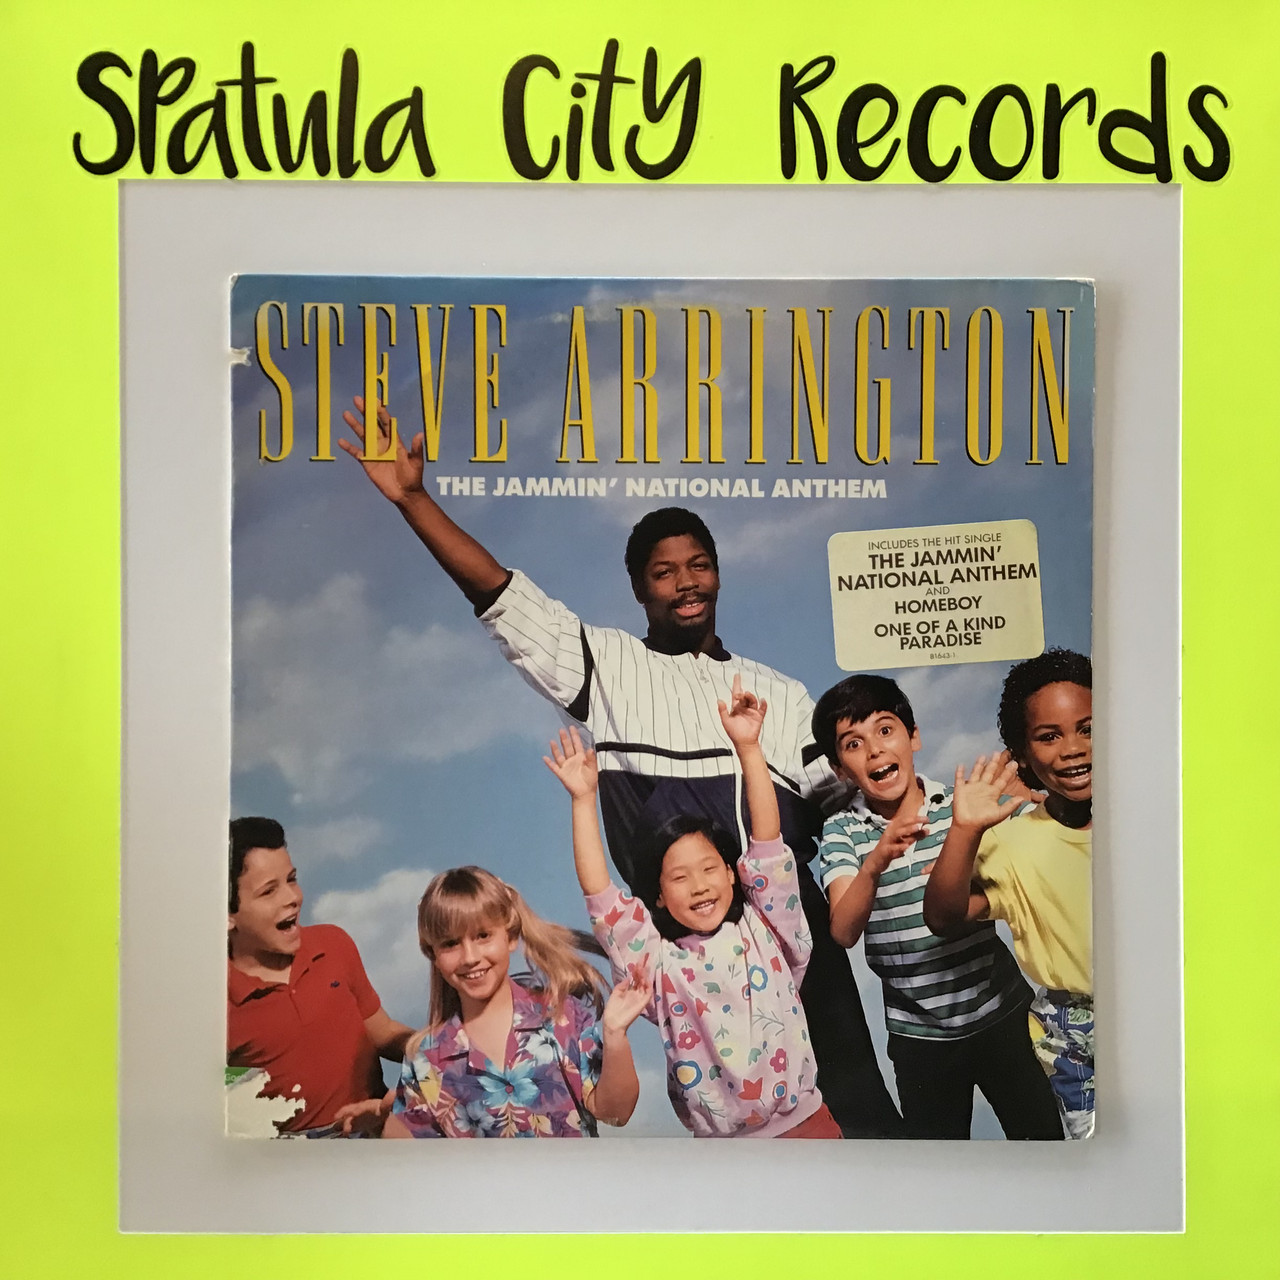 Steve Arrington - The Jammin' National Anthem - PROMO - vinyl record album LP